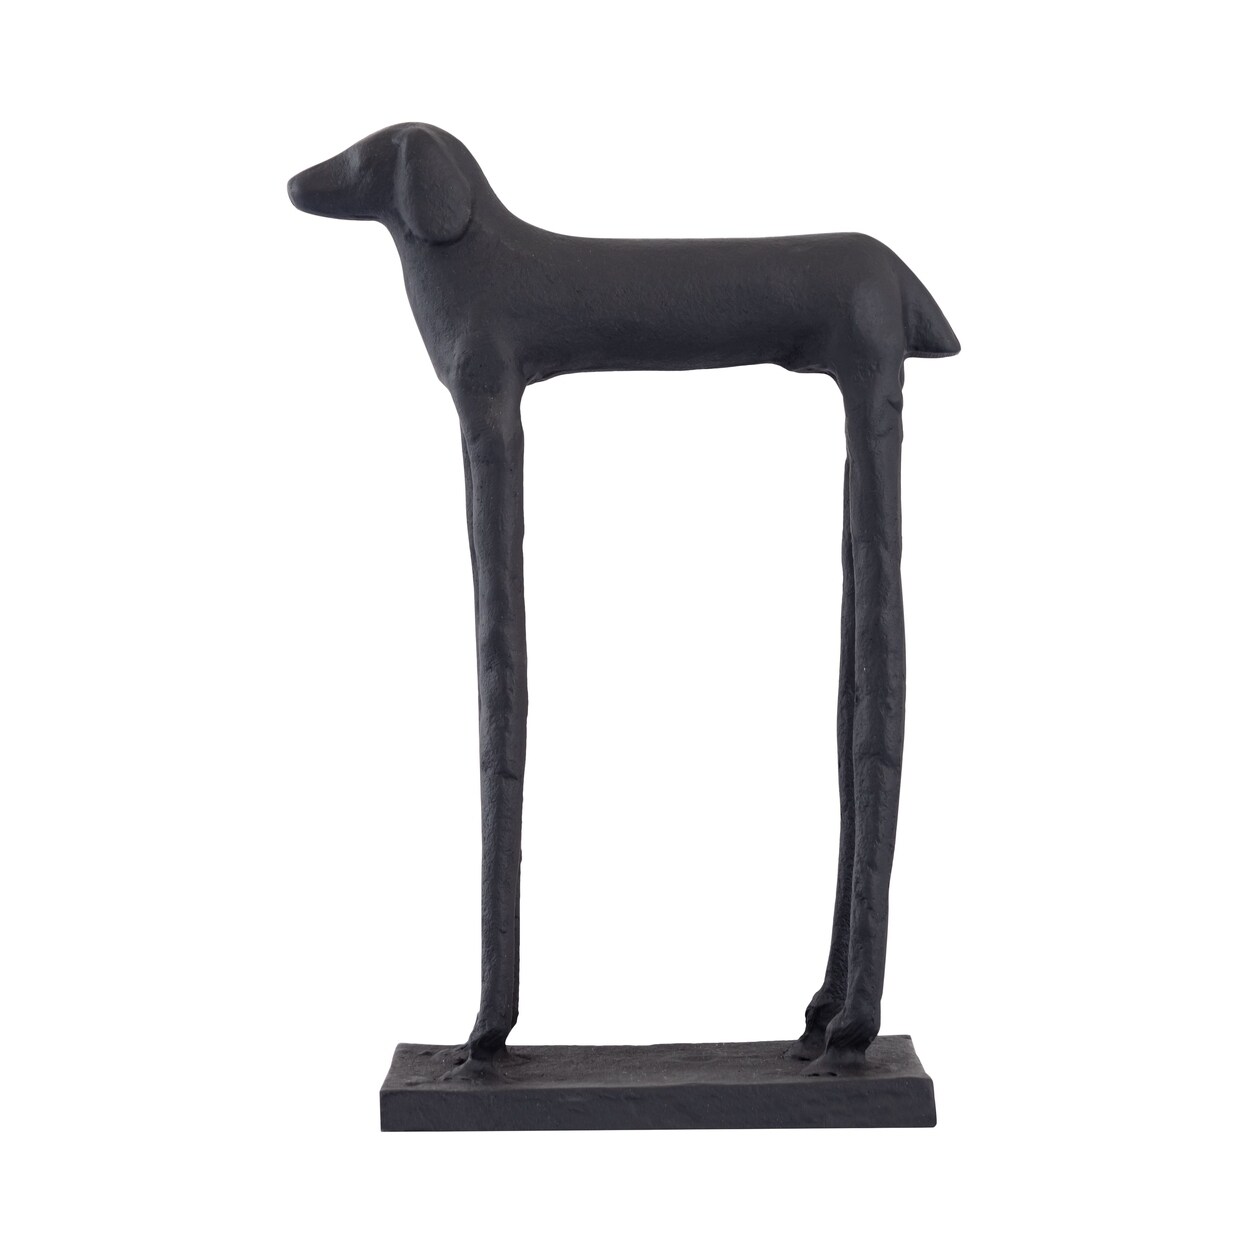 Elk Studio Jorgie Dog Object - Aged Black